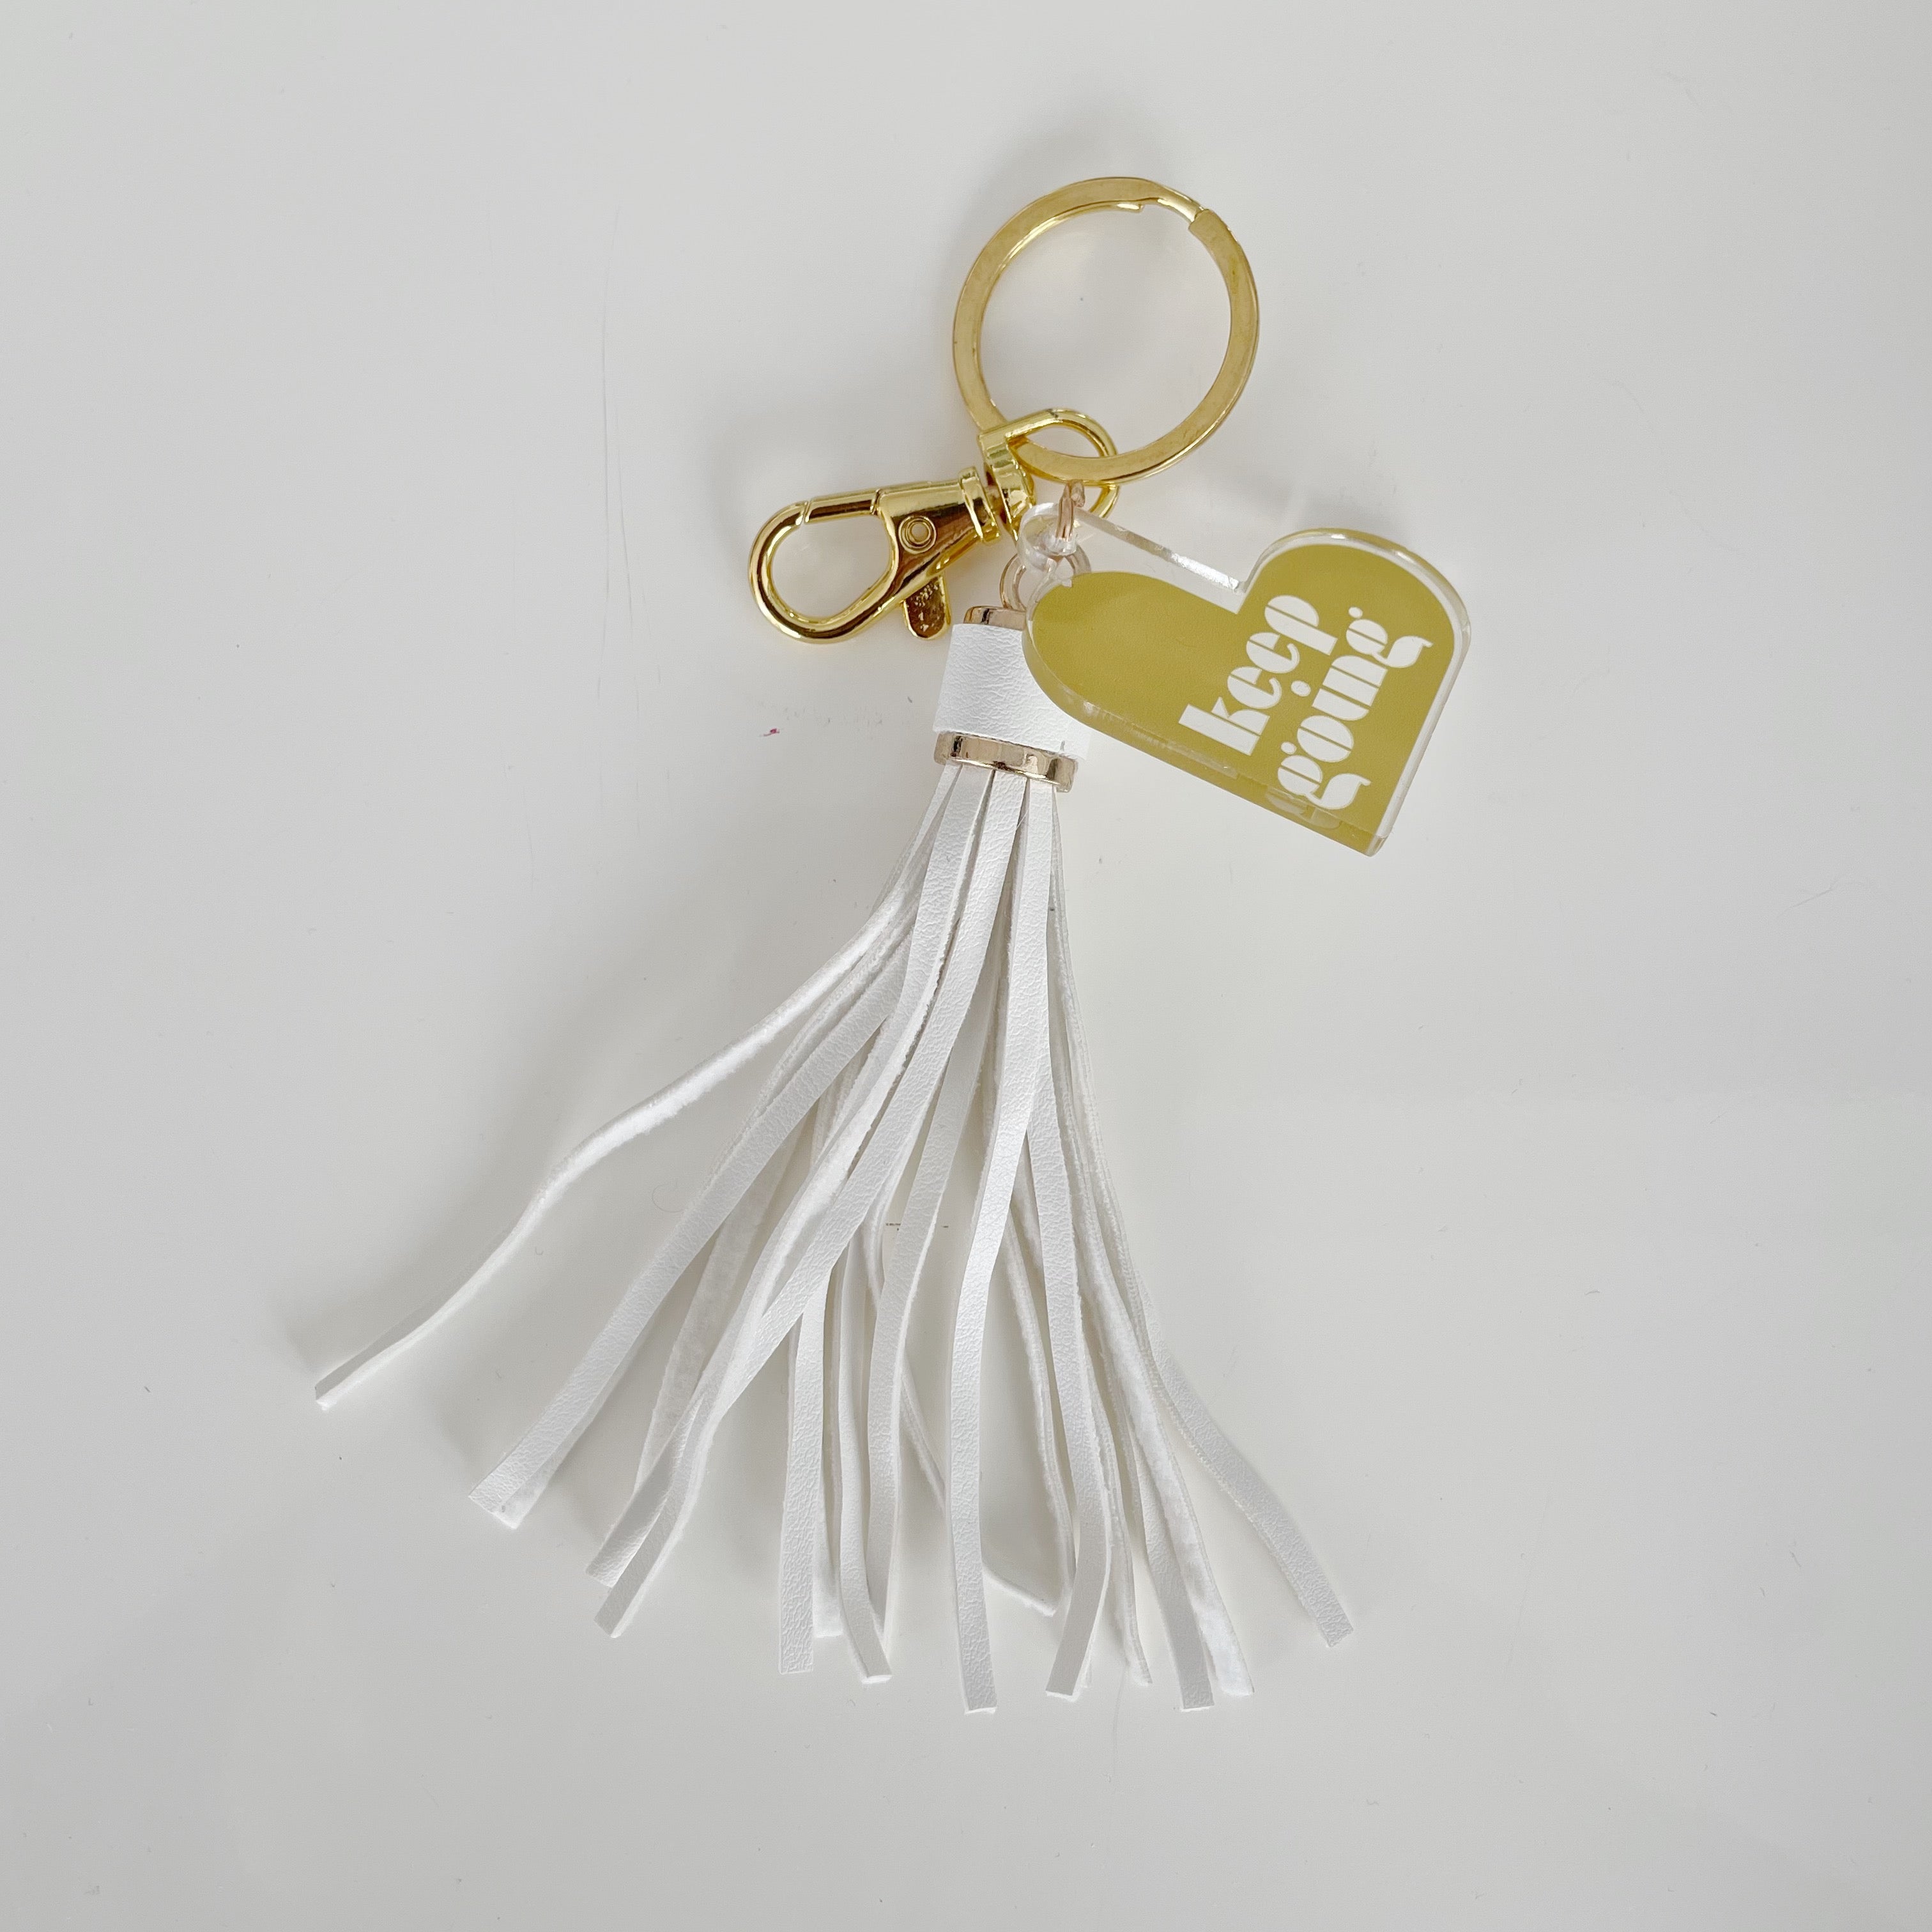 Keep Going - Tassel Keychain and Bag Charm